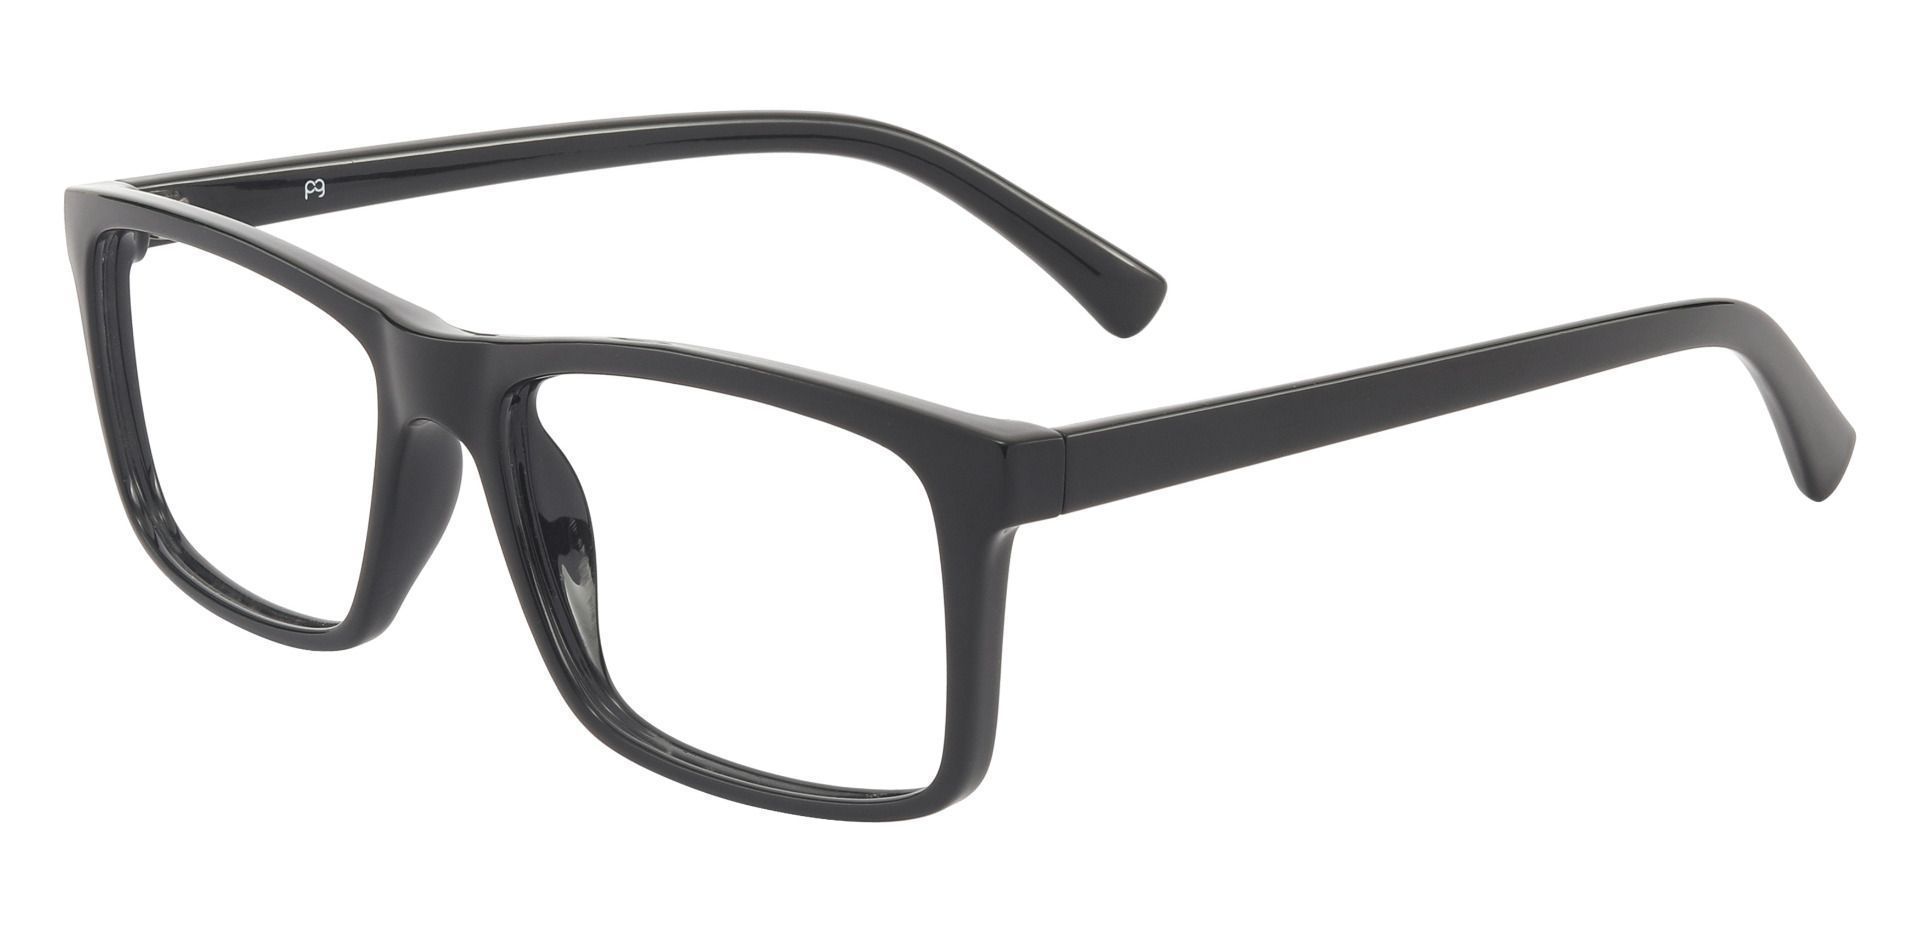 Matthew Rectangle Prescription Glasses - Black